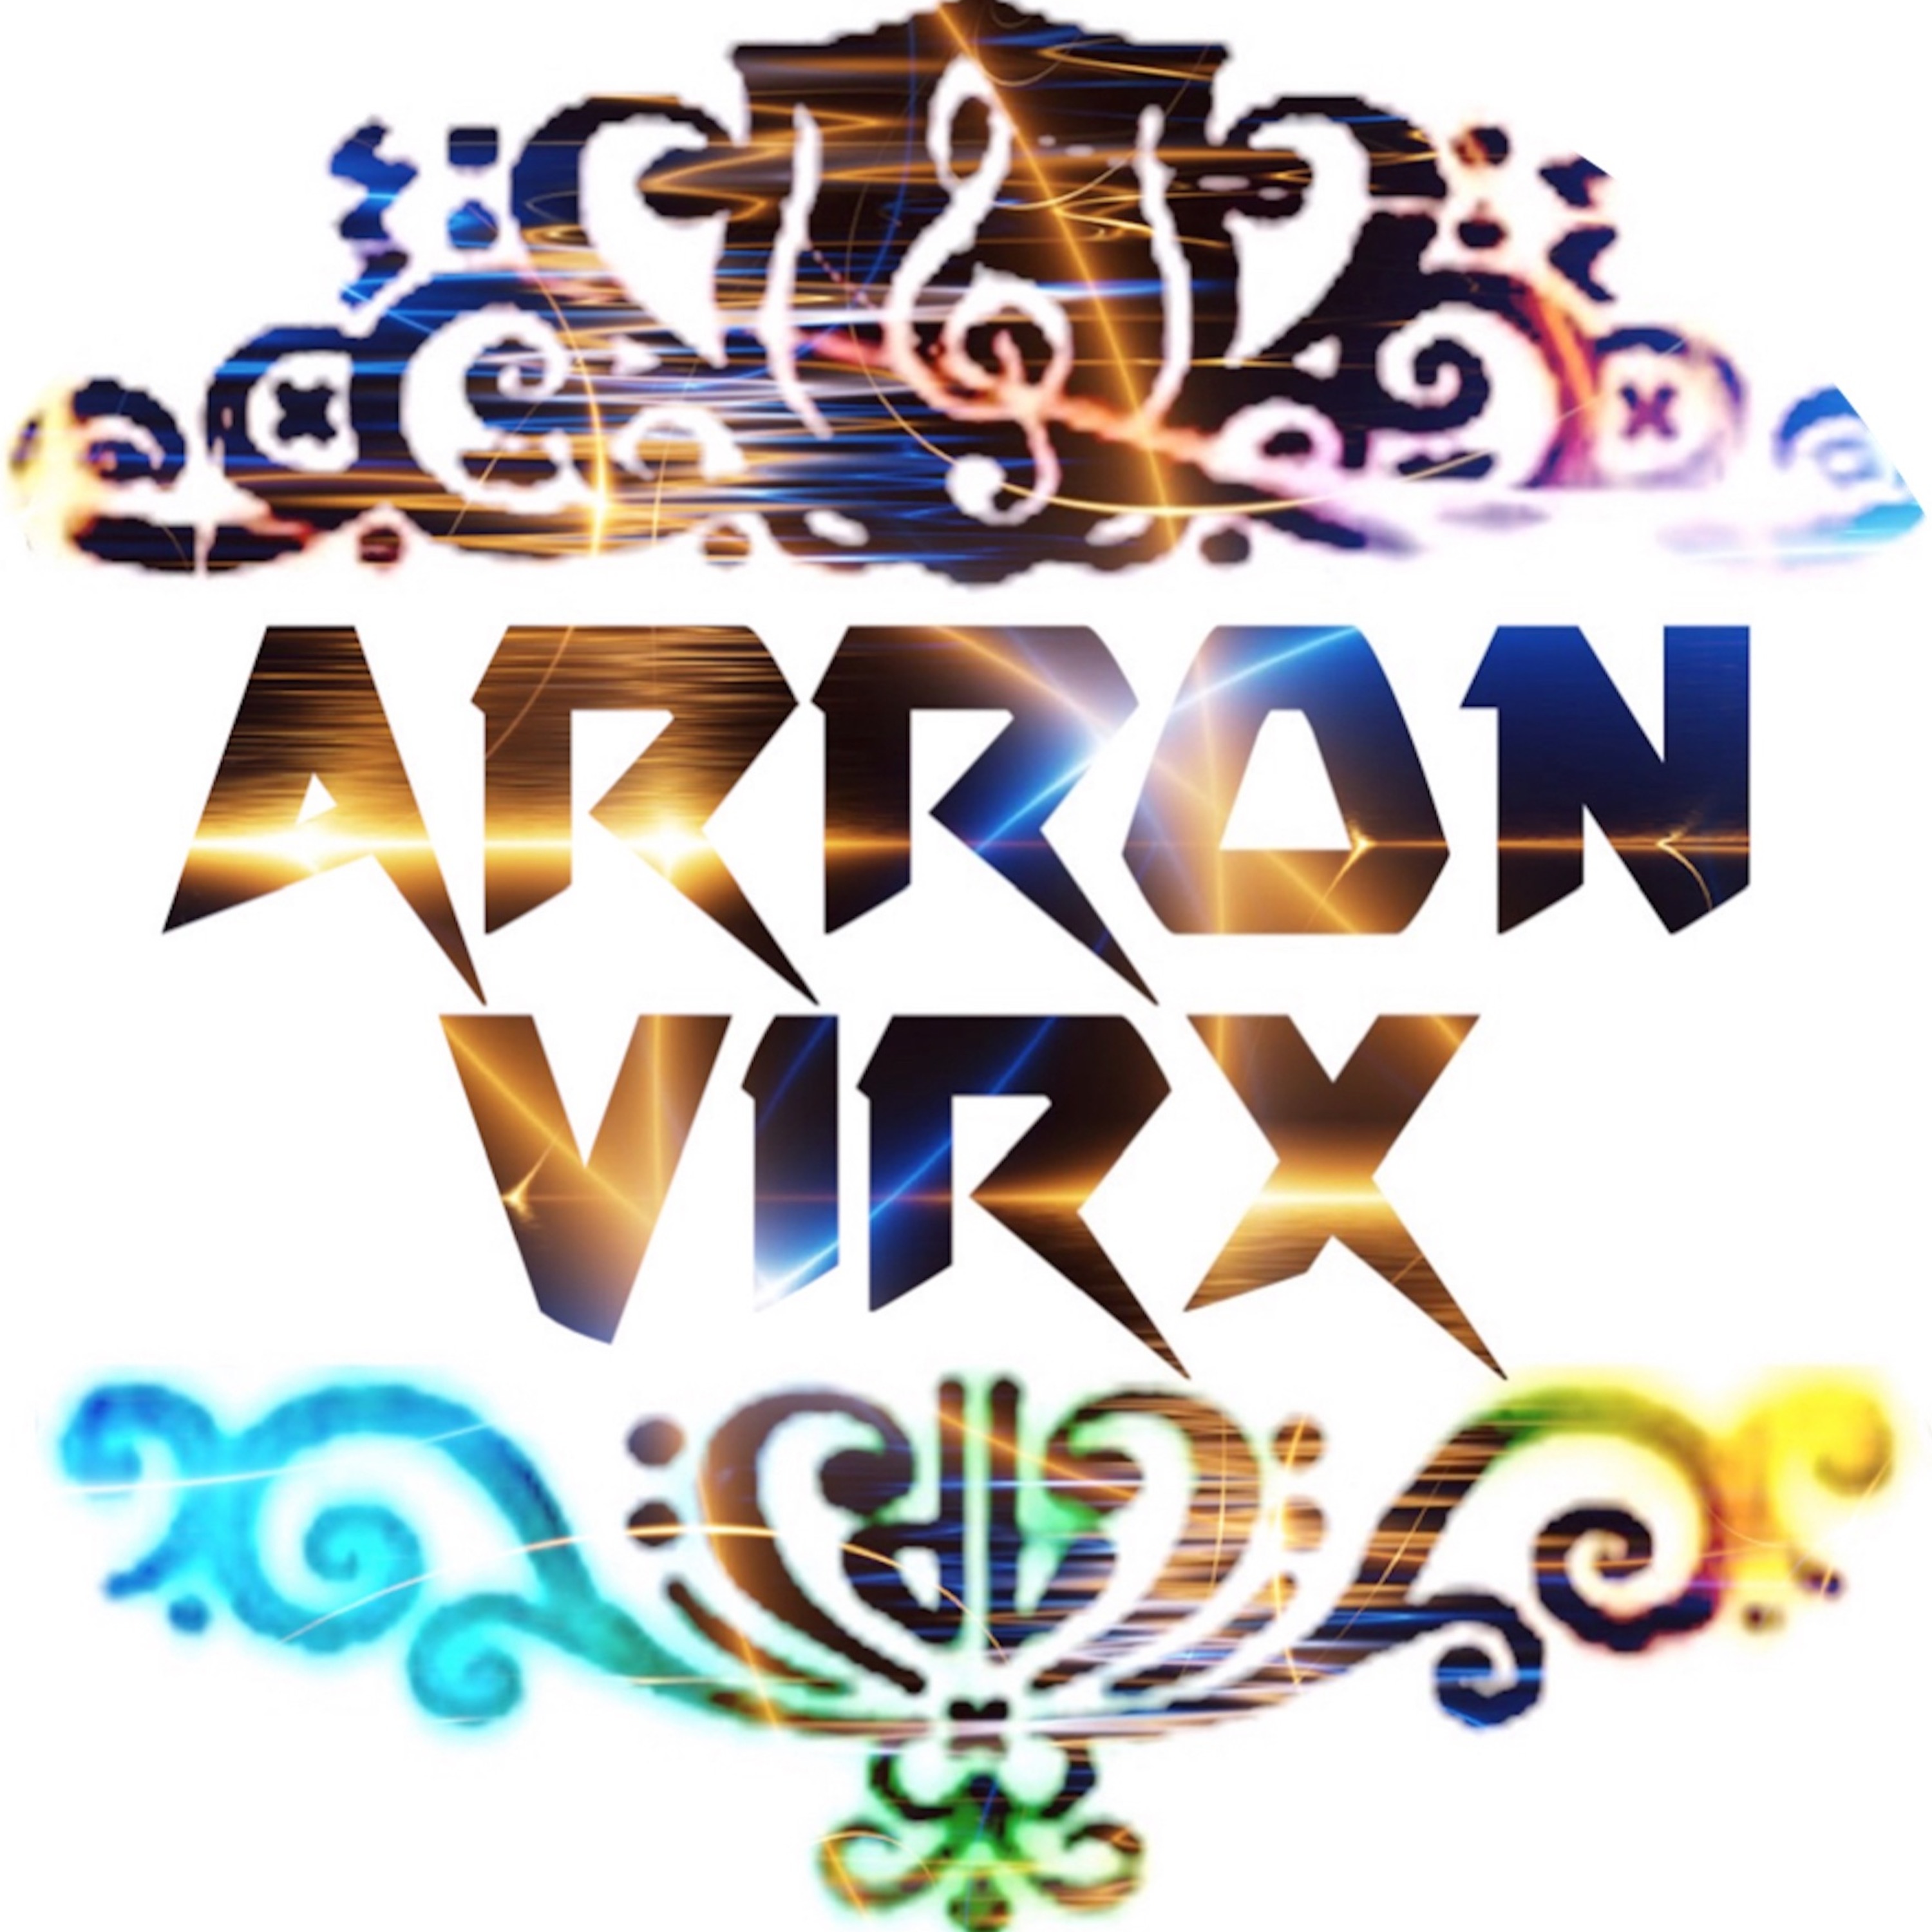 ArronVirx